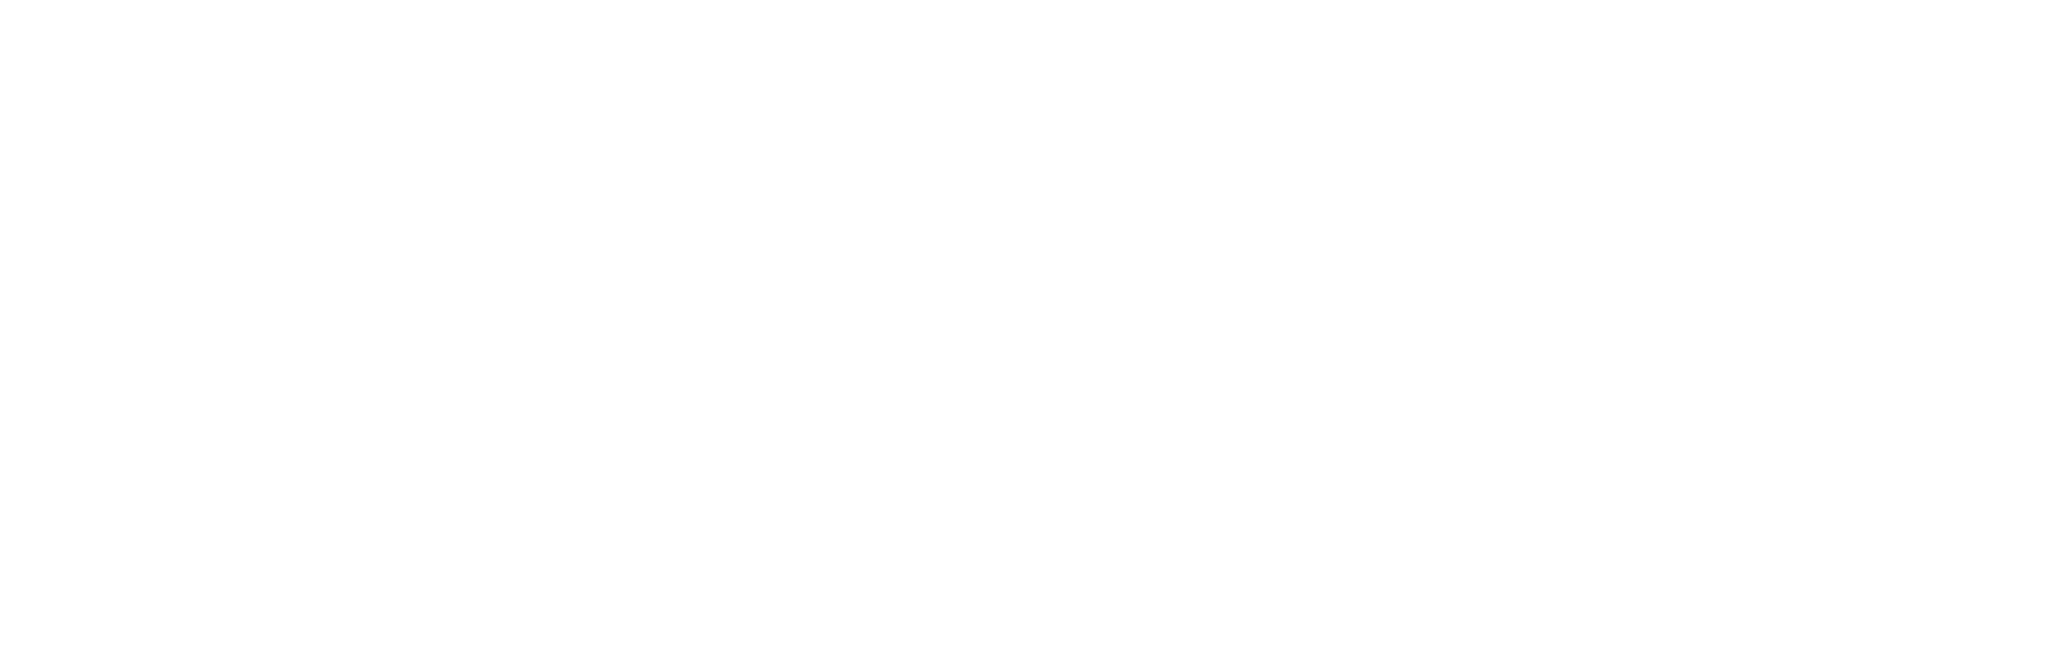 Davis Family Charitable Foundation